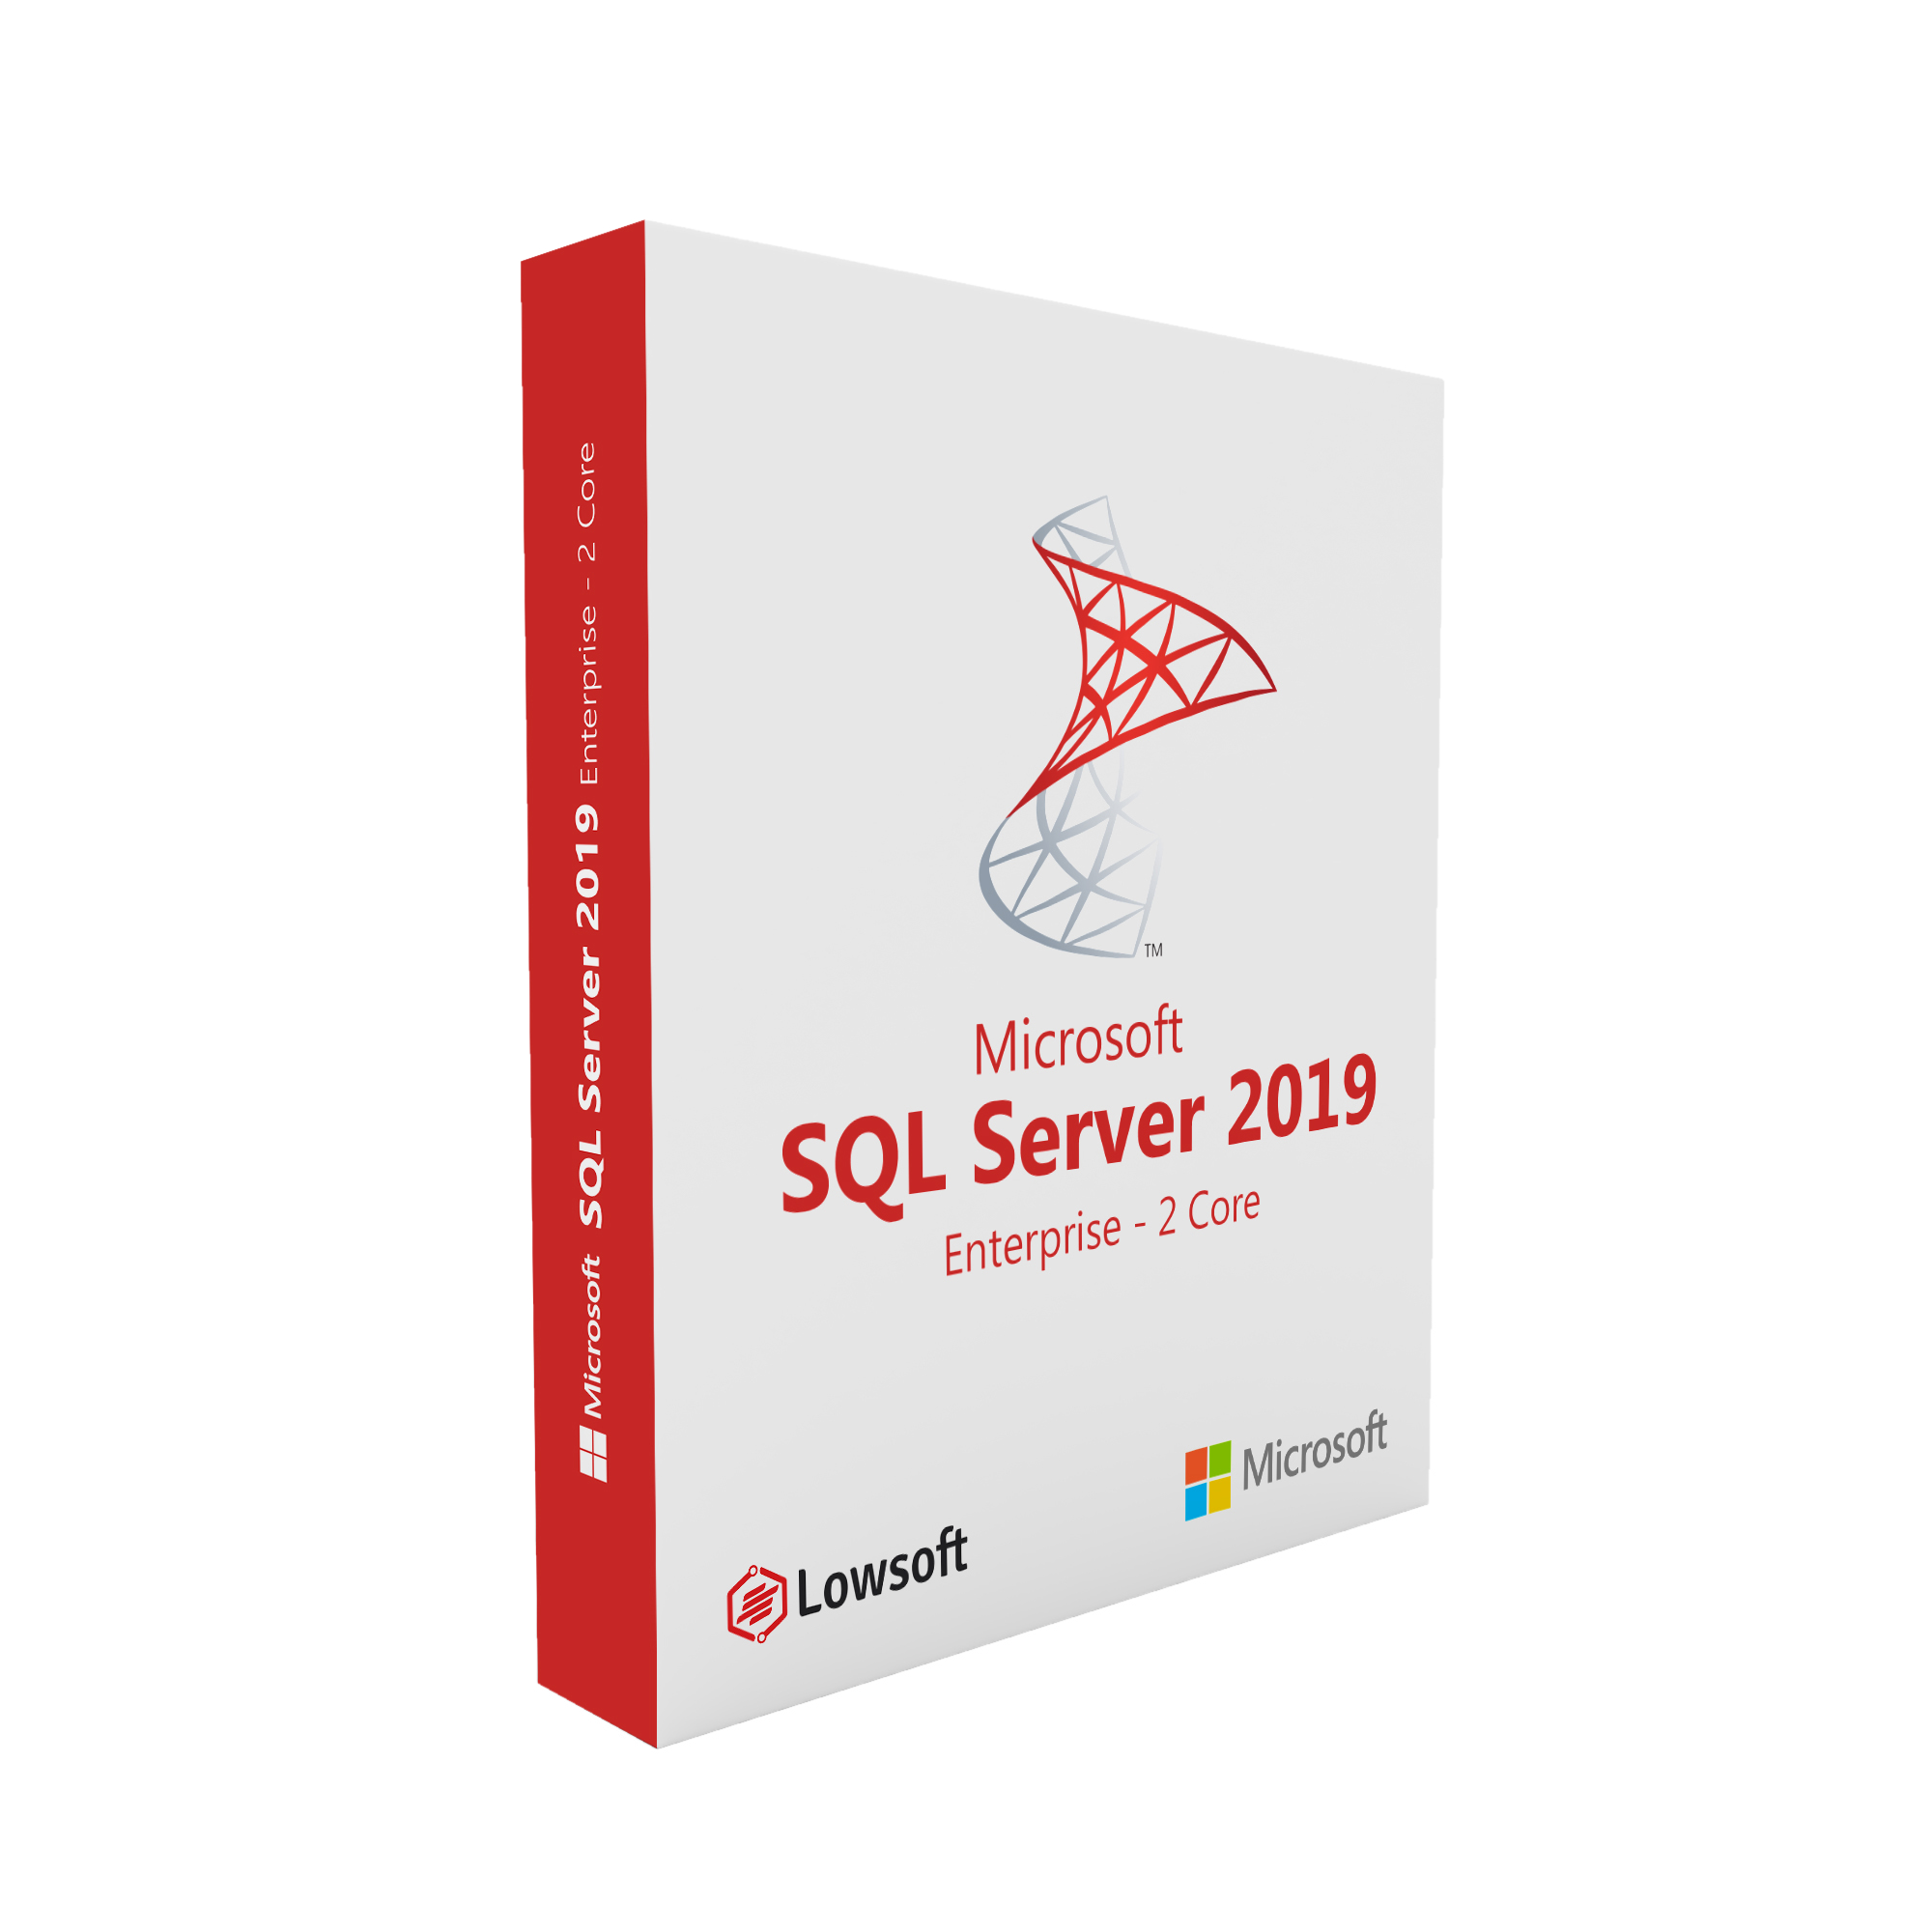 SQL Server 2019 Enterprise (2 Core)